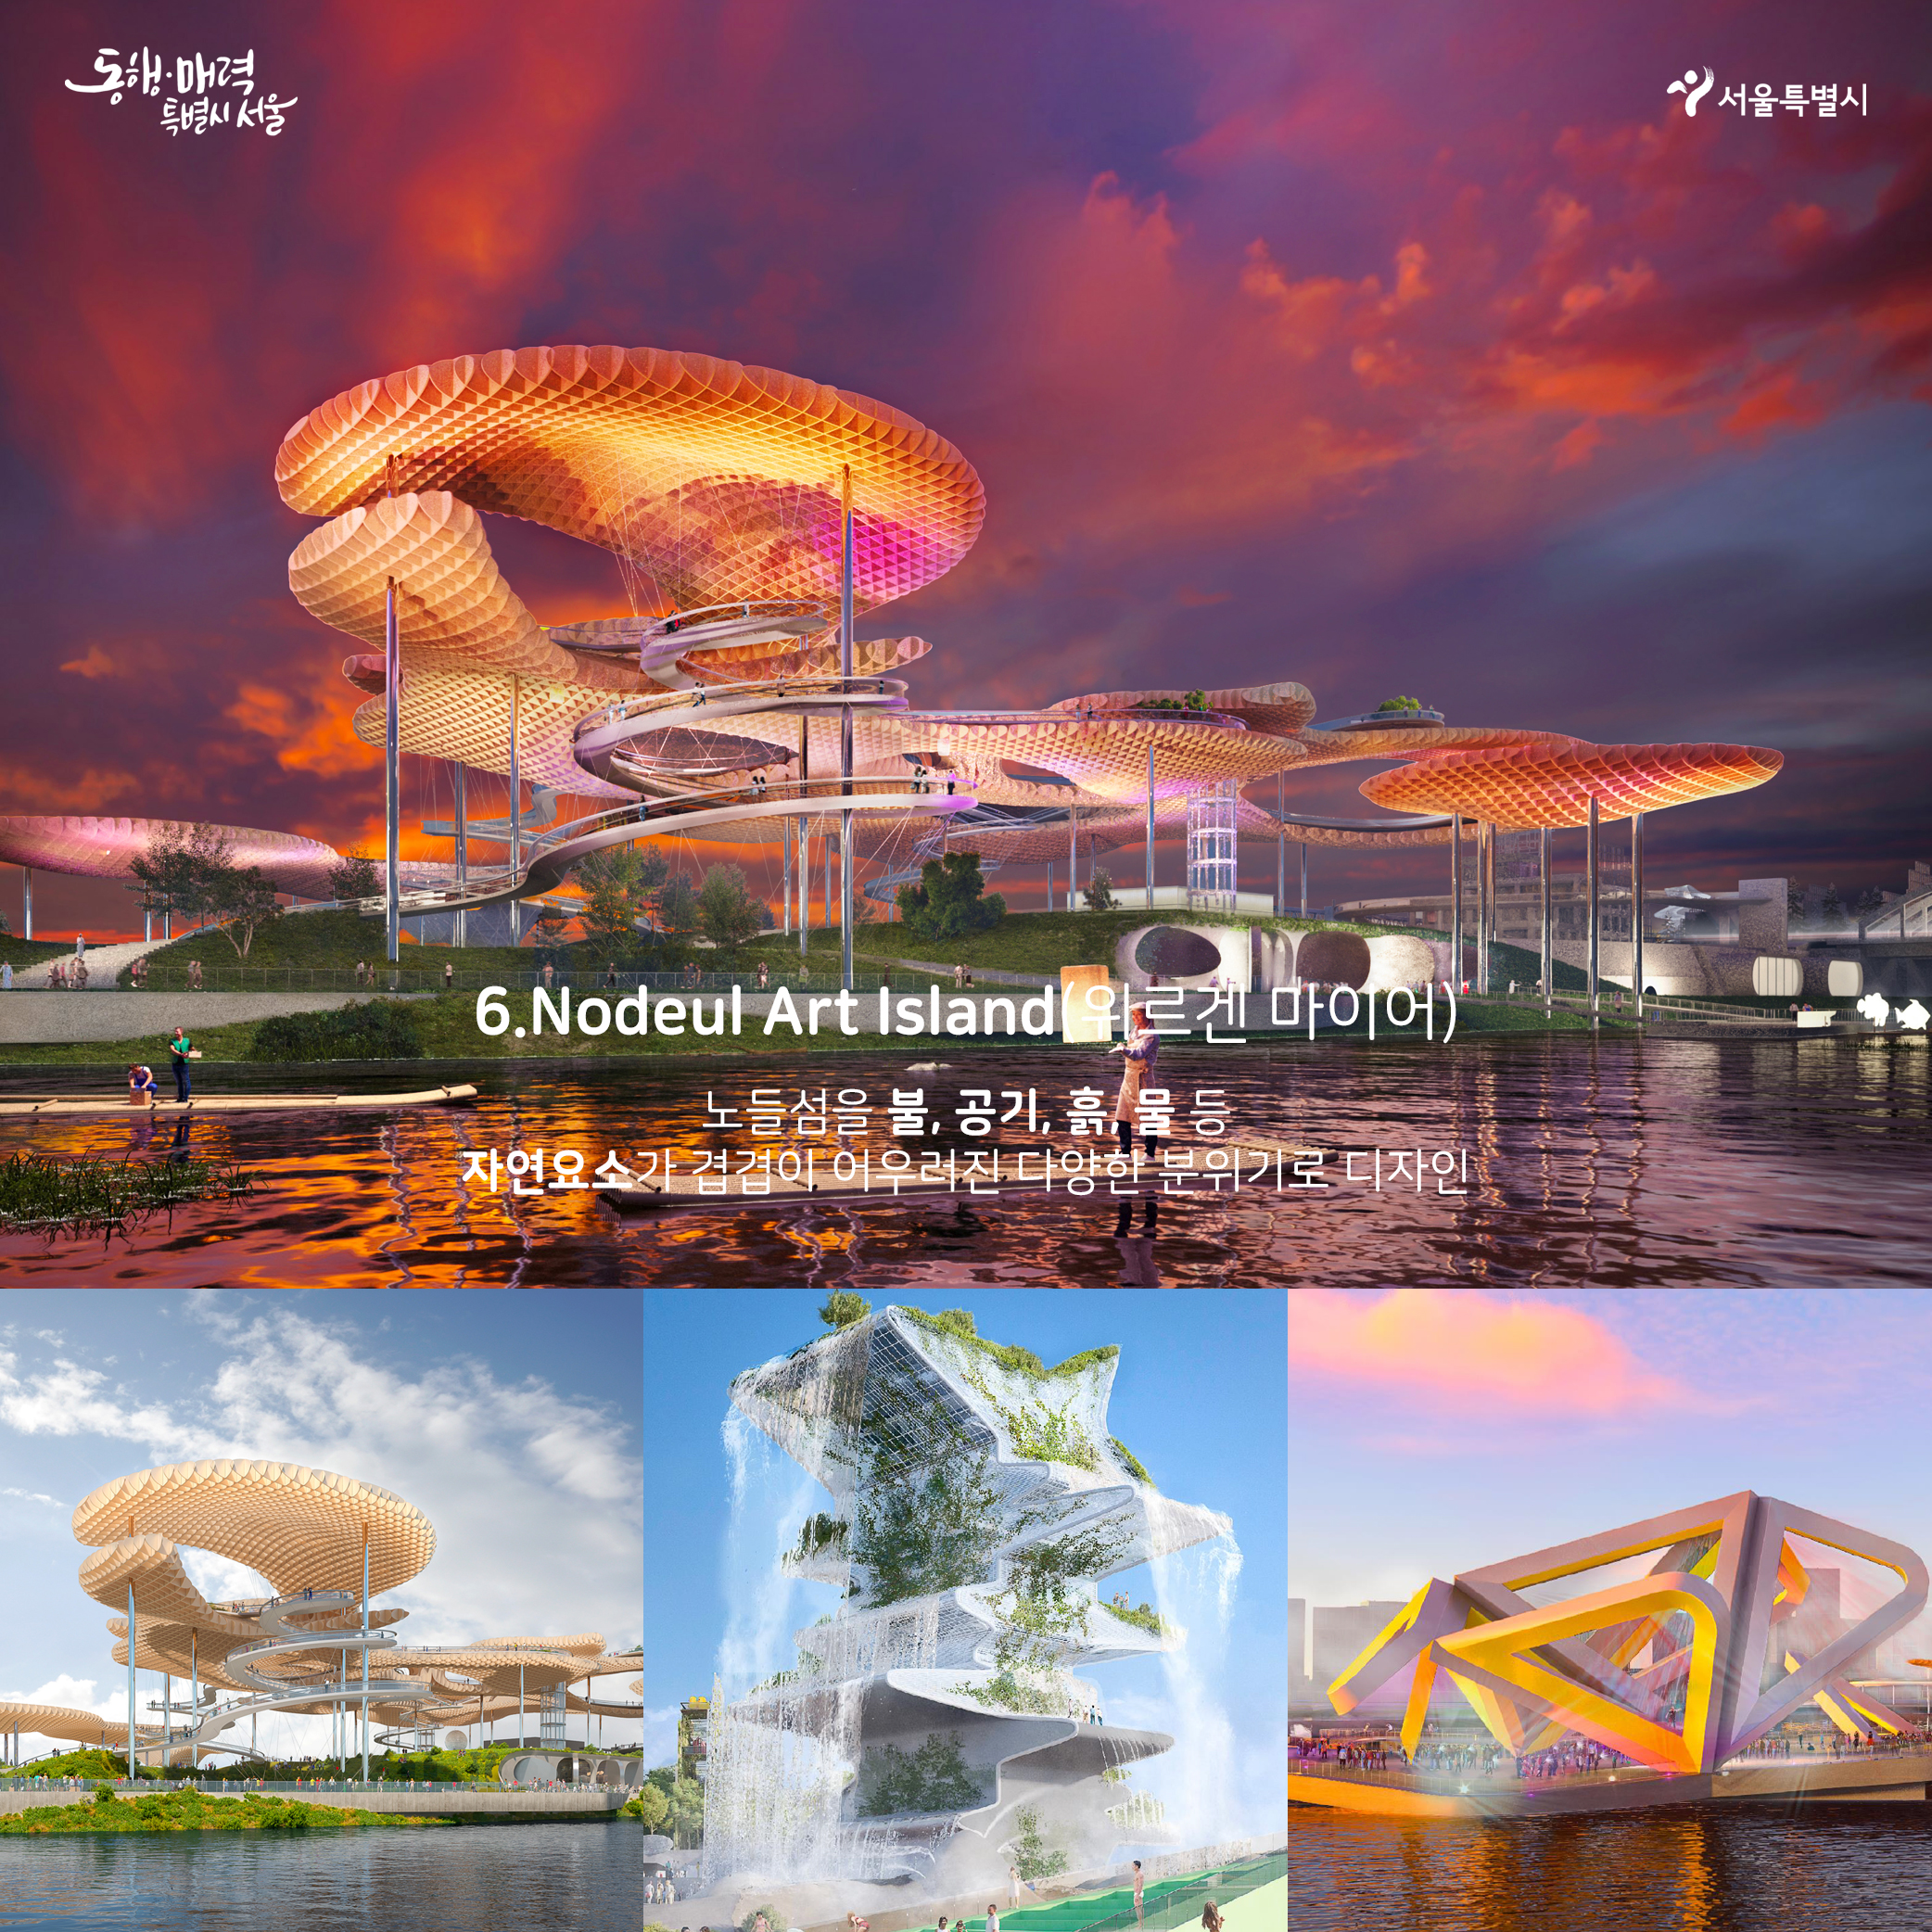 6.Nodeul Art Island(위르겐 마이어):노들섬을 불,공기,흙,물등 자연요소가 겹겹이 어우러진 다양한 분위기로 디자인